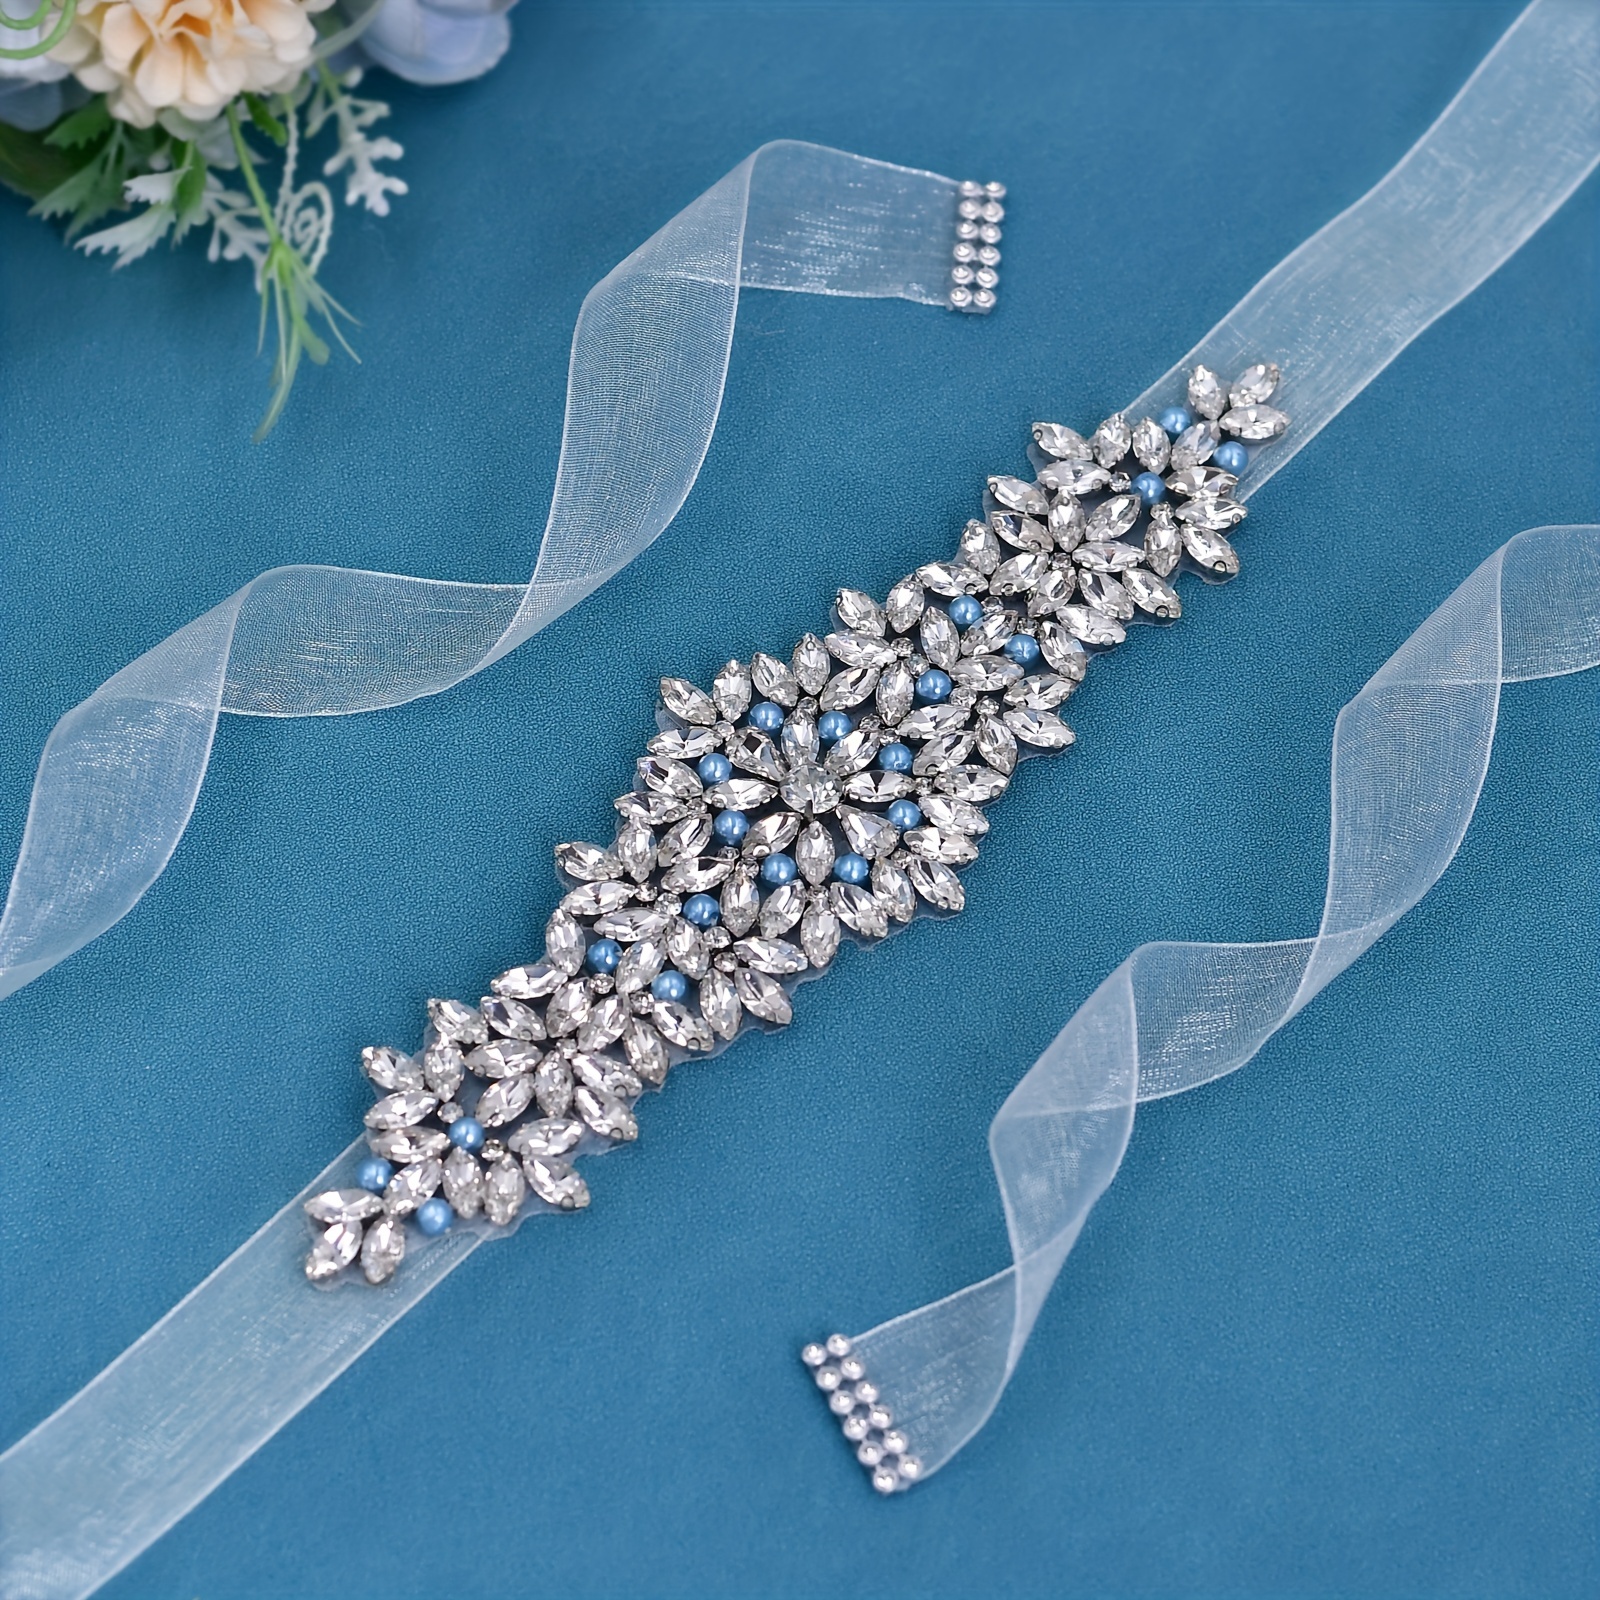 Handmade Bridal Belt Wedding Belts Sashes Crystal Belt Rhinestone Belt with White Organza Ribbon for Bridal Gowns, Pageant Dresses,Temu